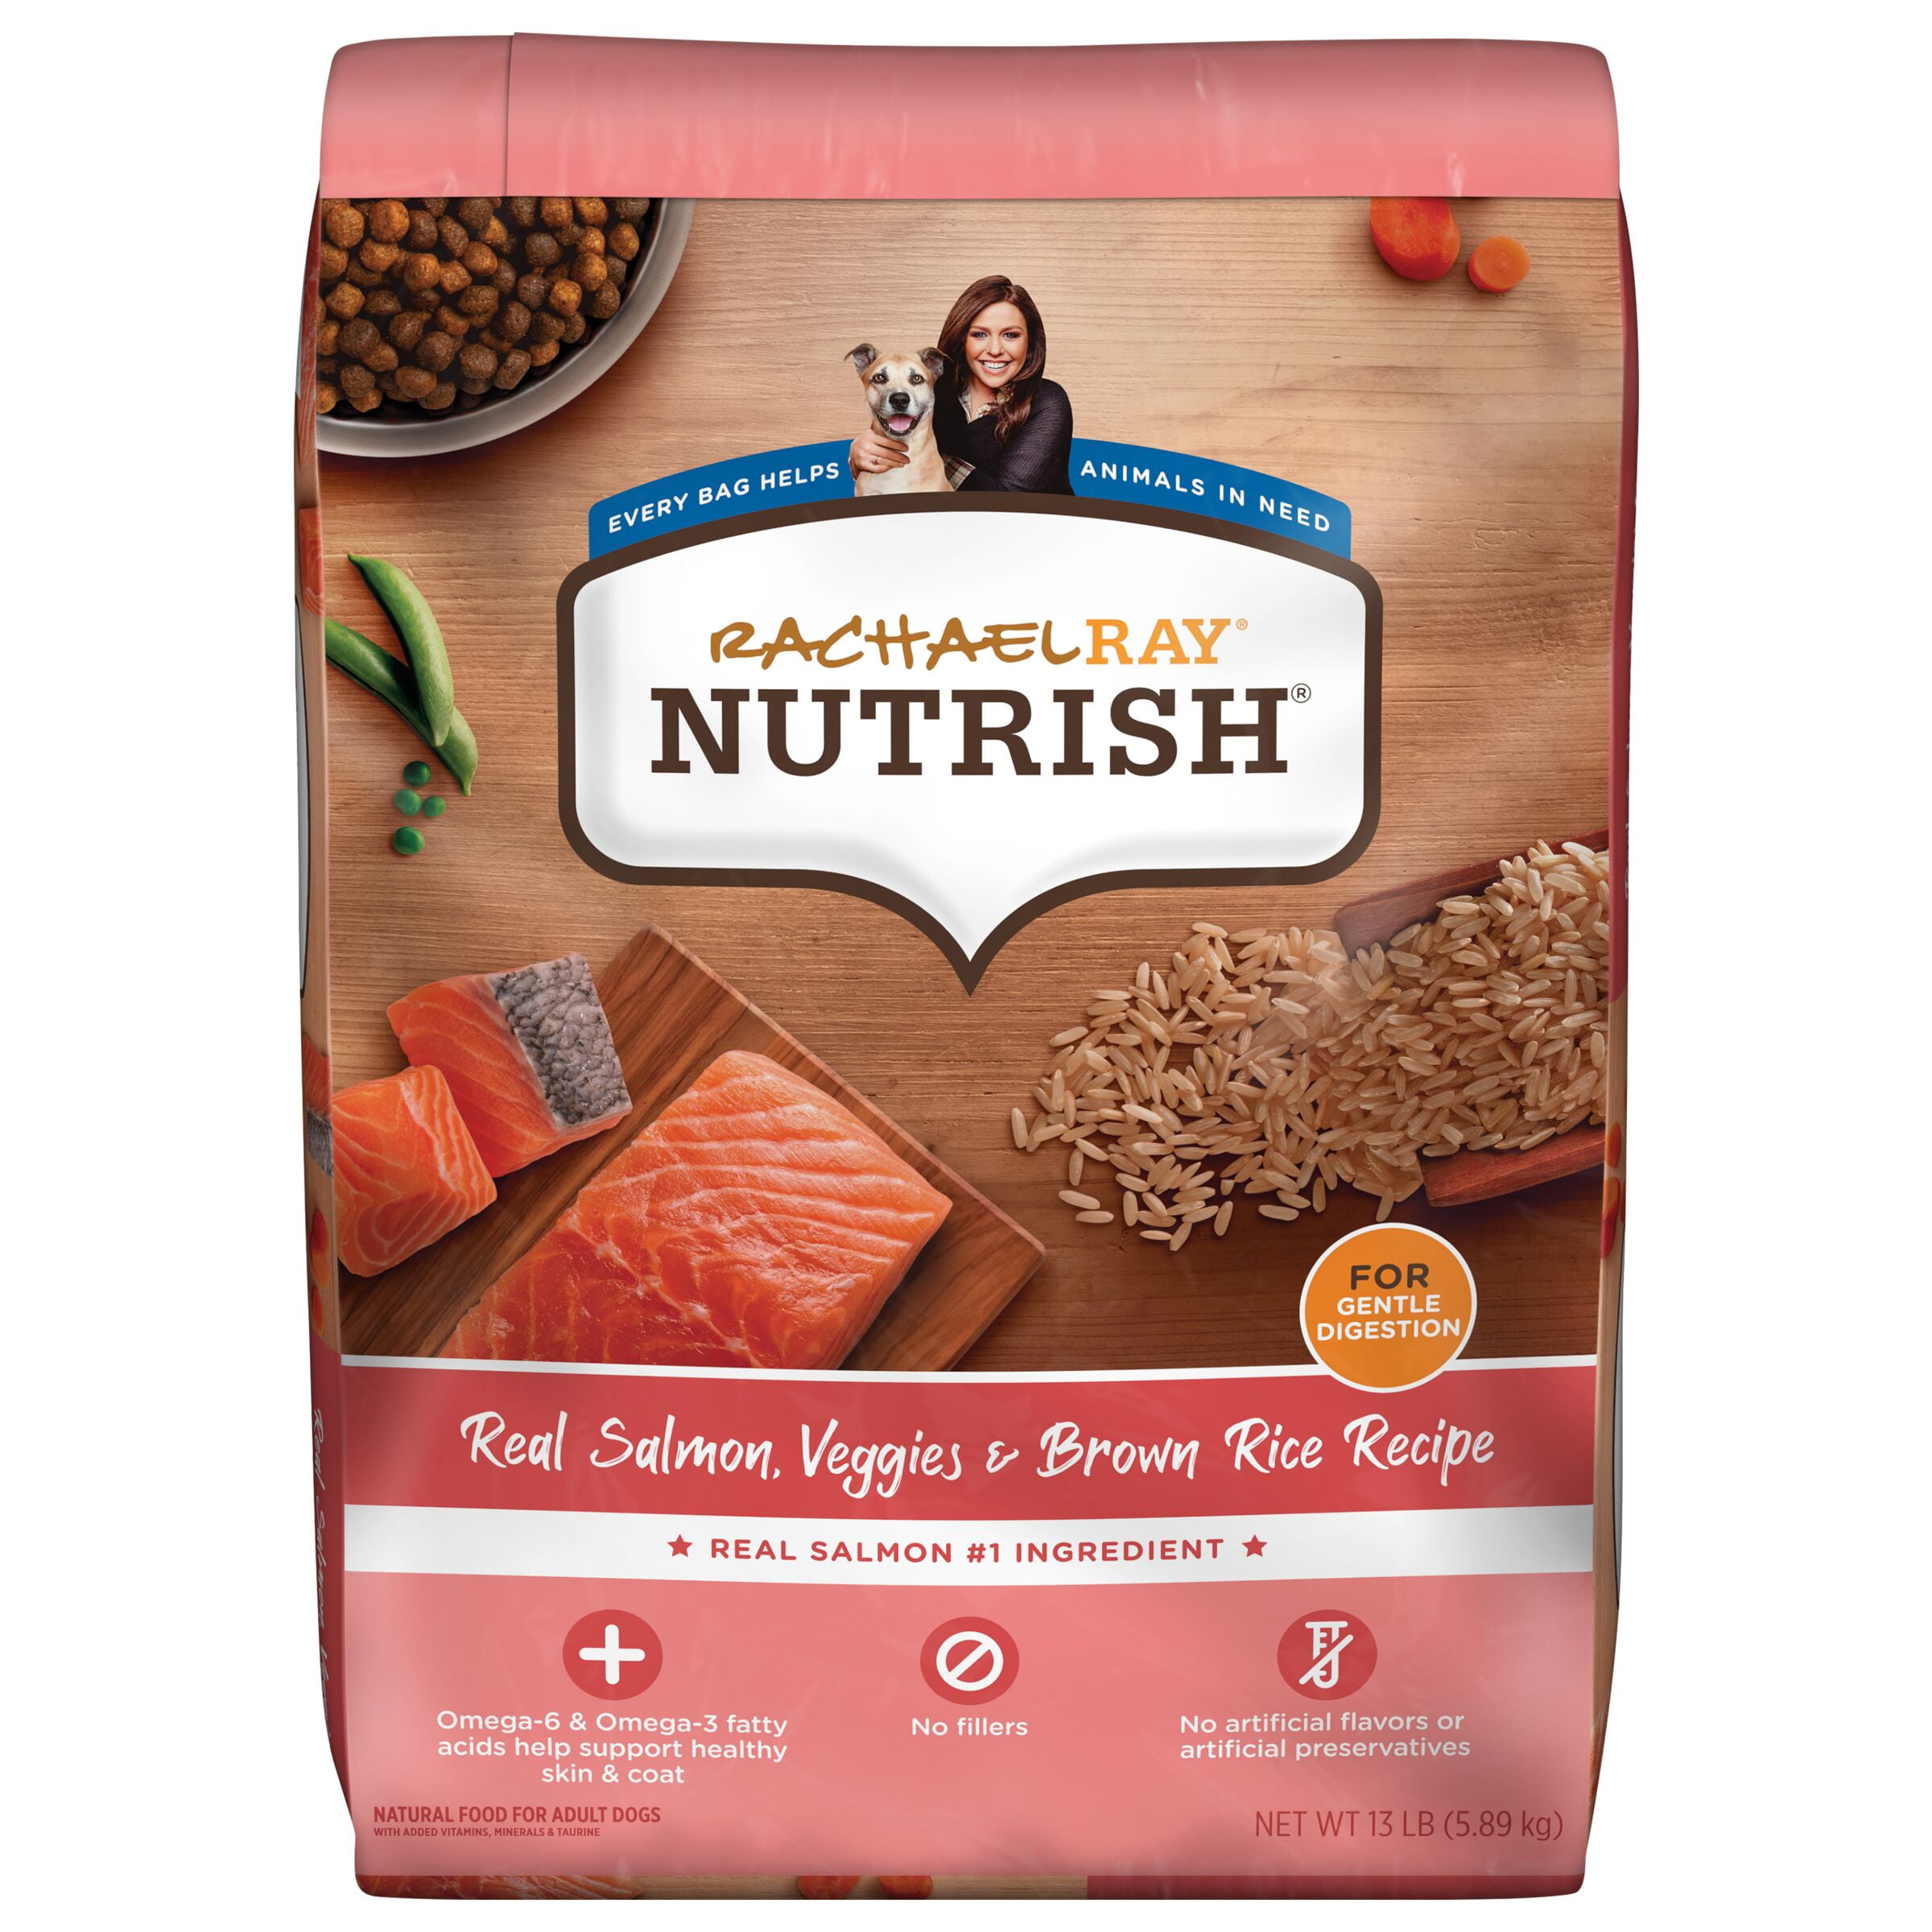 Rachael Ray Nutrish Real Salmon, Veggies & Brown Rice Recipe, Premium Dry Dog Food, 13 lb. Bag